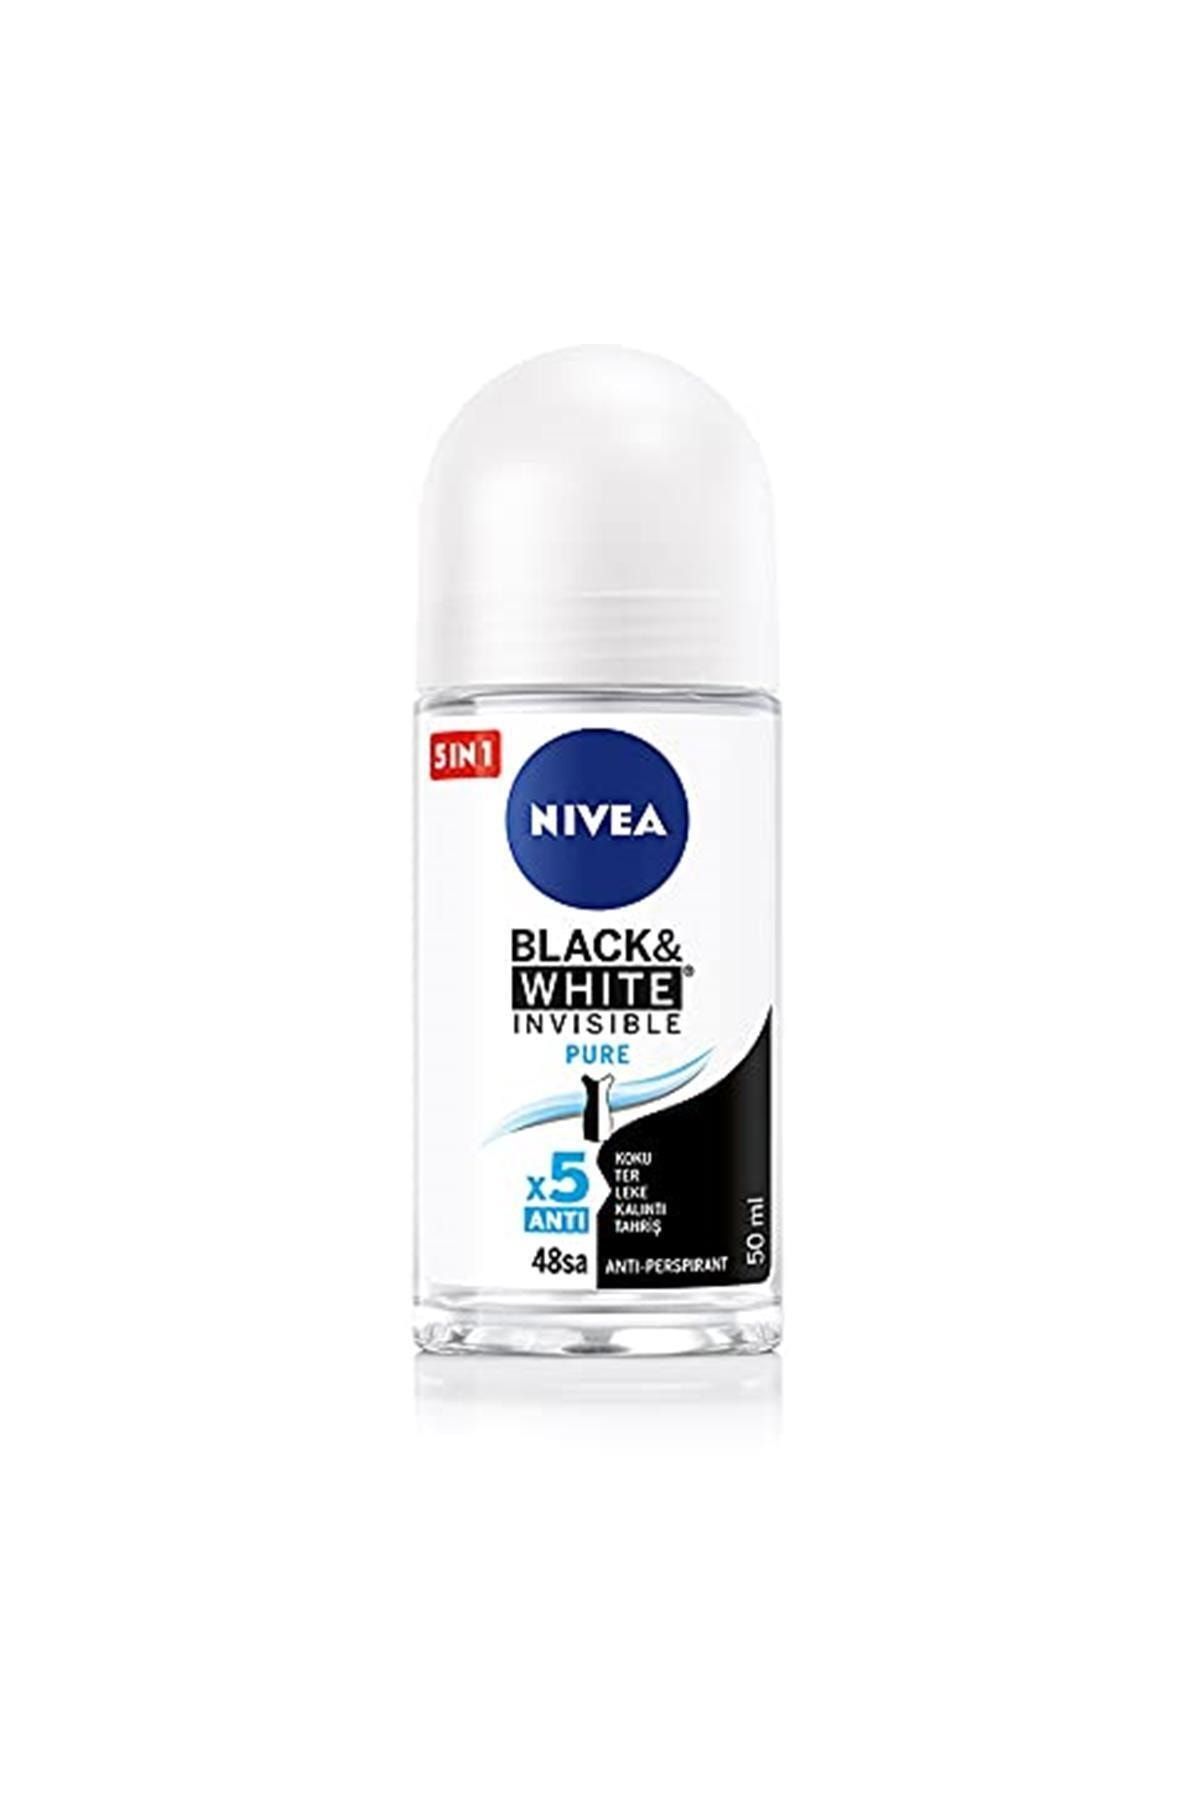 NIVEA İnvisible Black White Pure Roll On Deodorant Kadın 50ml HPPYSHPZ10009261